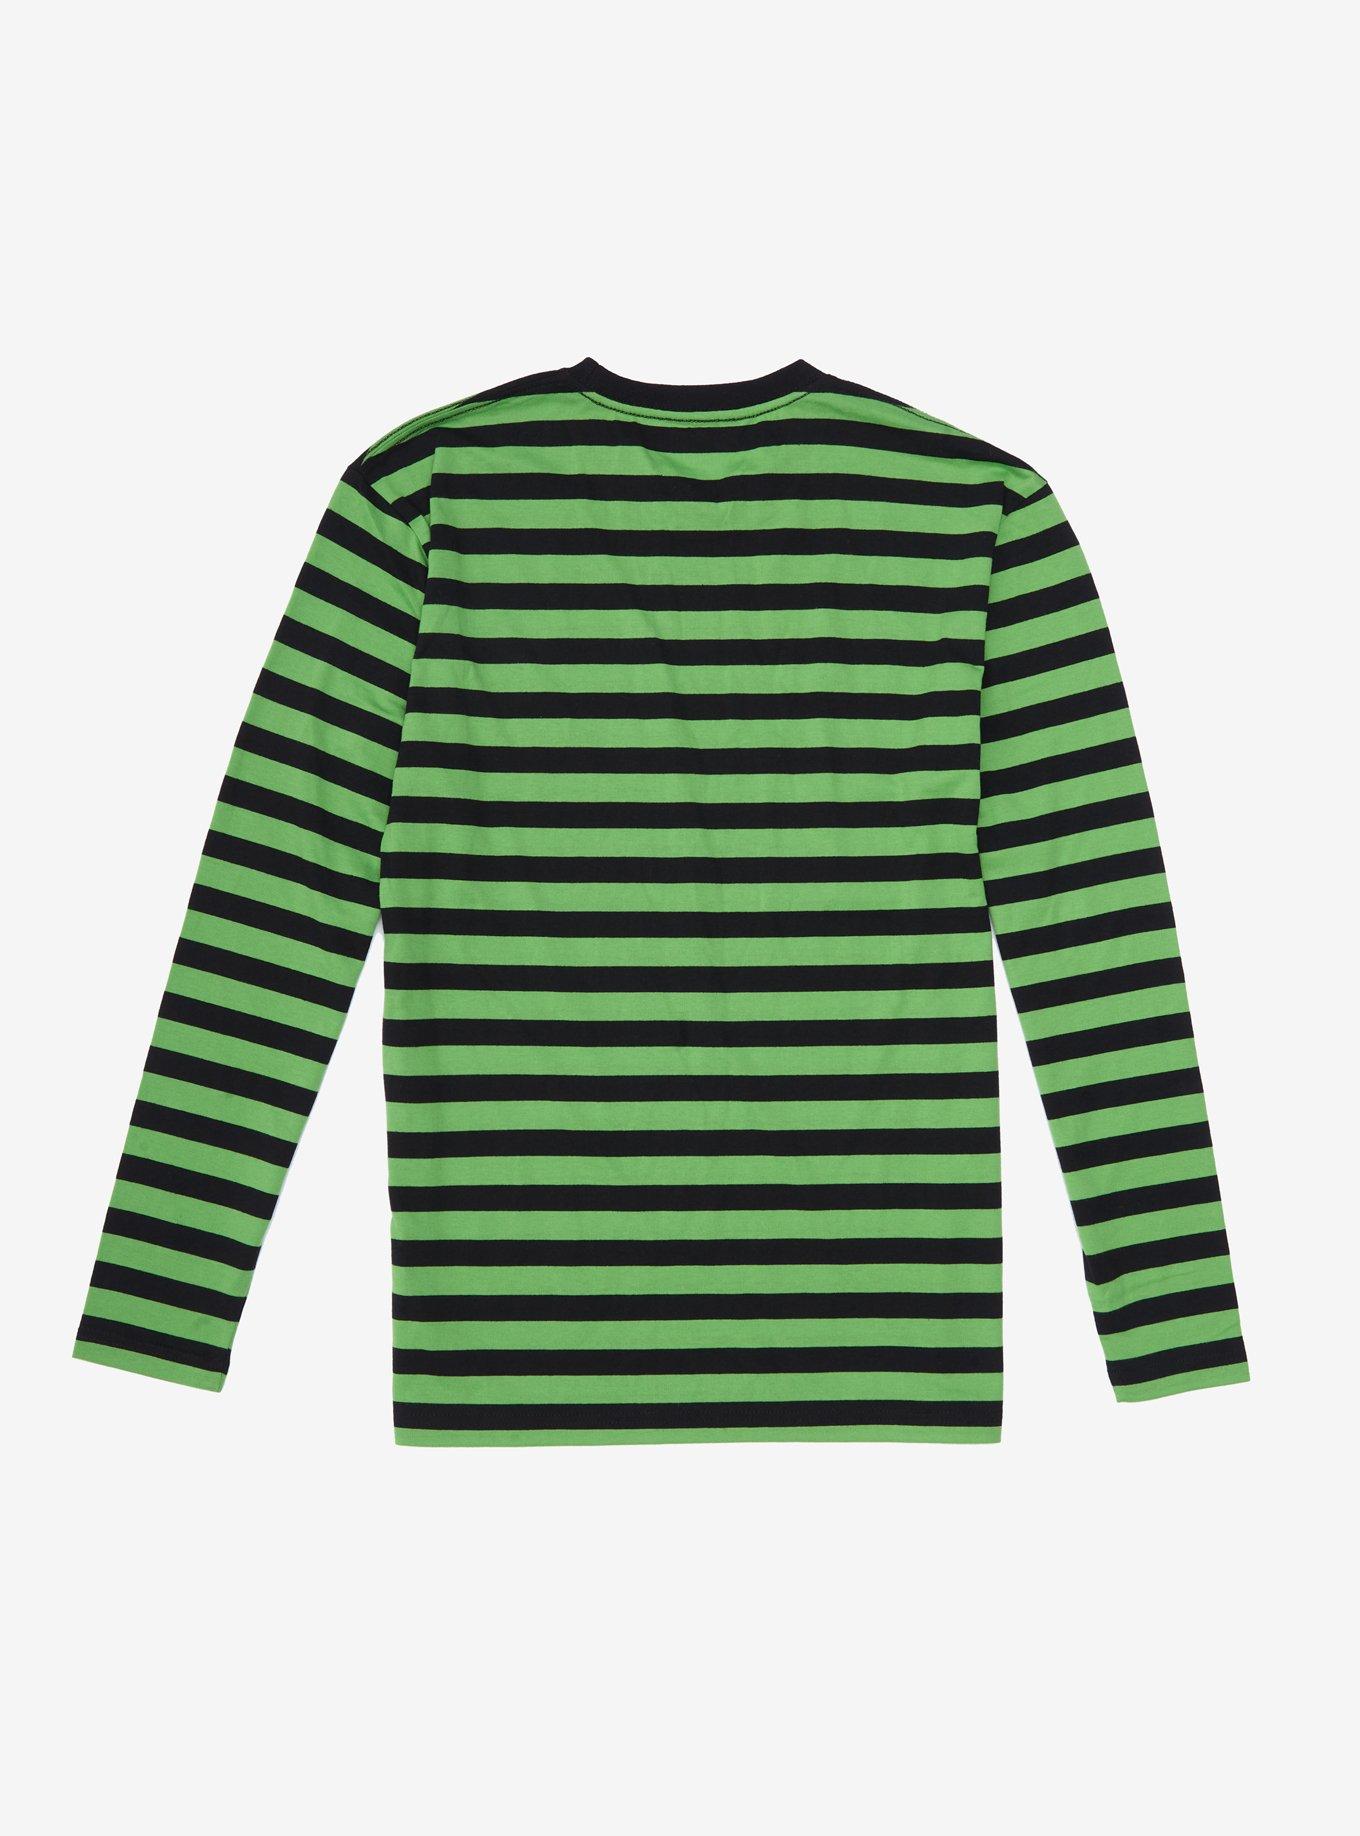 Green & Black Stripe Long-Sleeve T-Shirt, STRIPE - GREEN, alternate